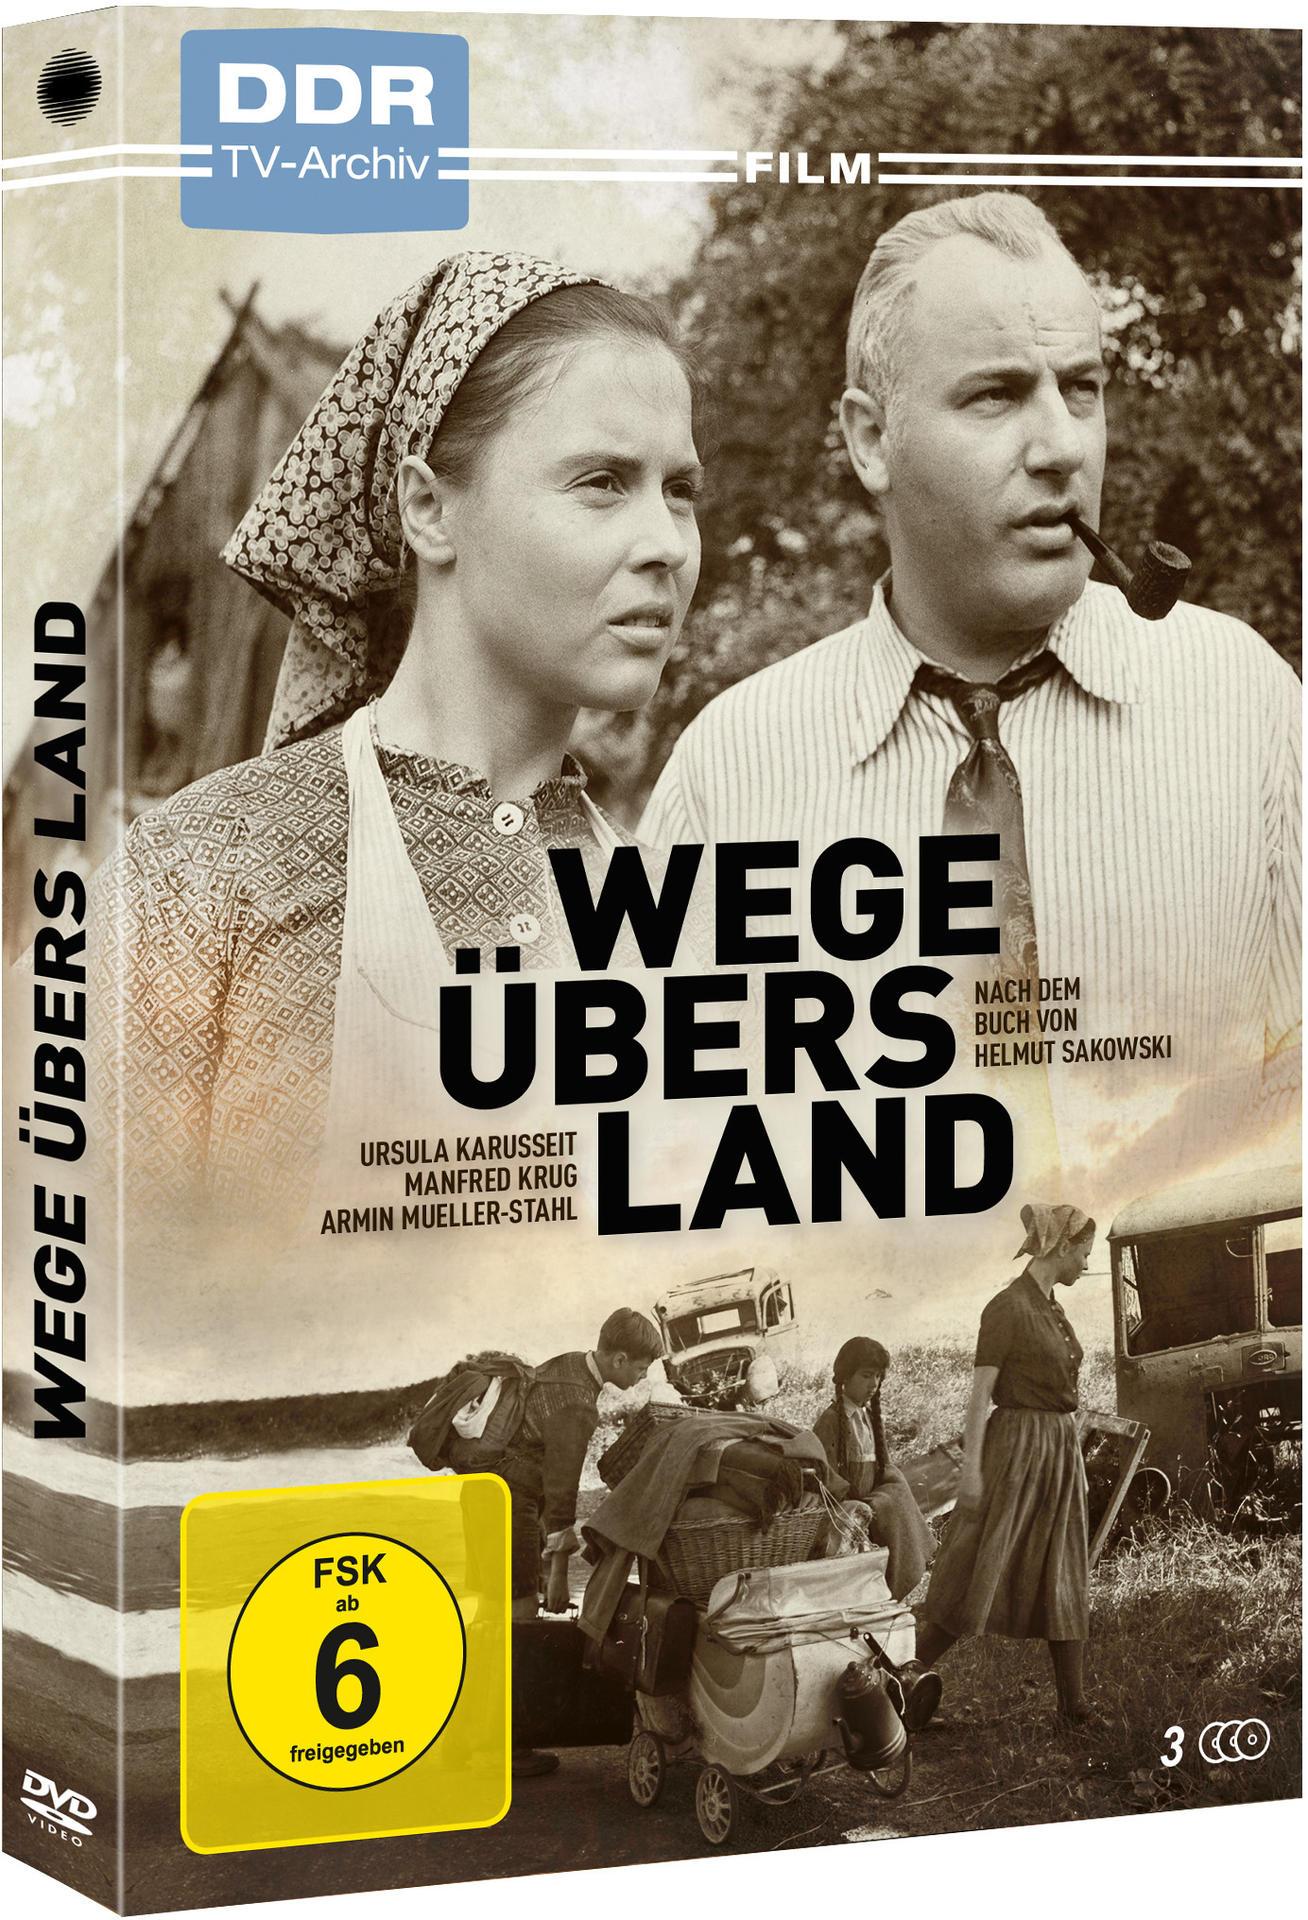 Wege übers - DVD Land DDR TV-Archiv